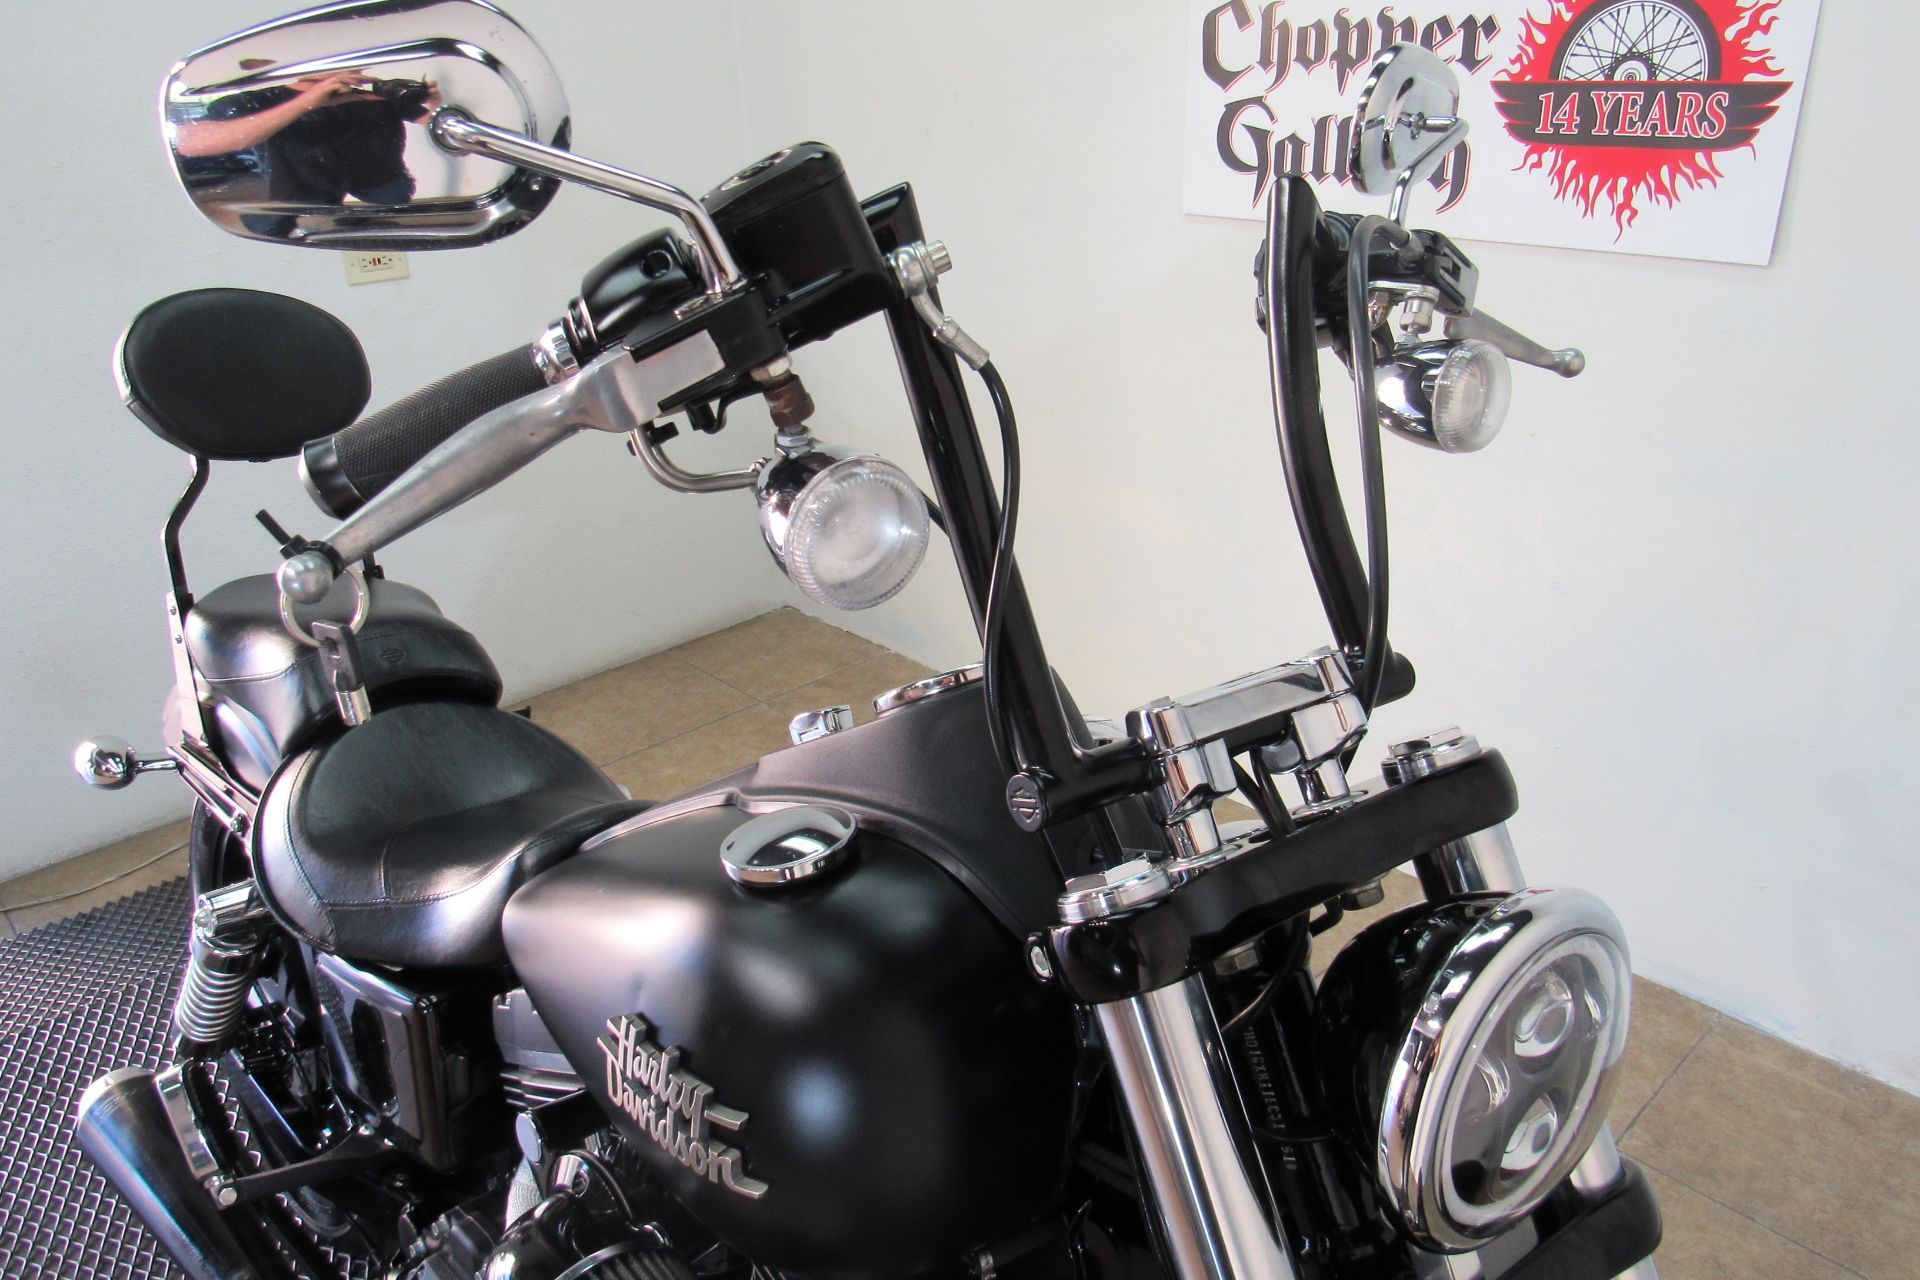 2014 Harley-Davidson Dyna® Street Bob® in Temecula, California - Photo 19